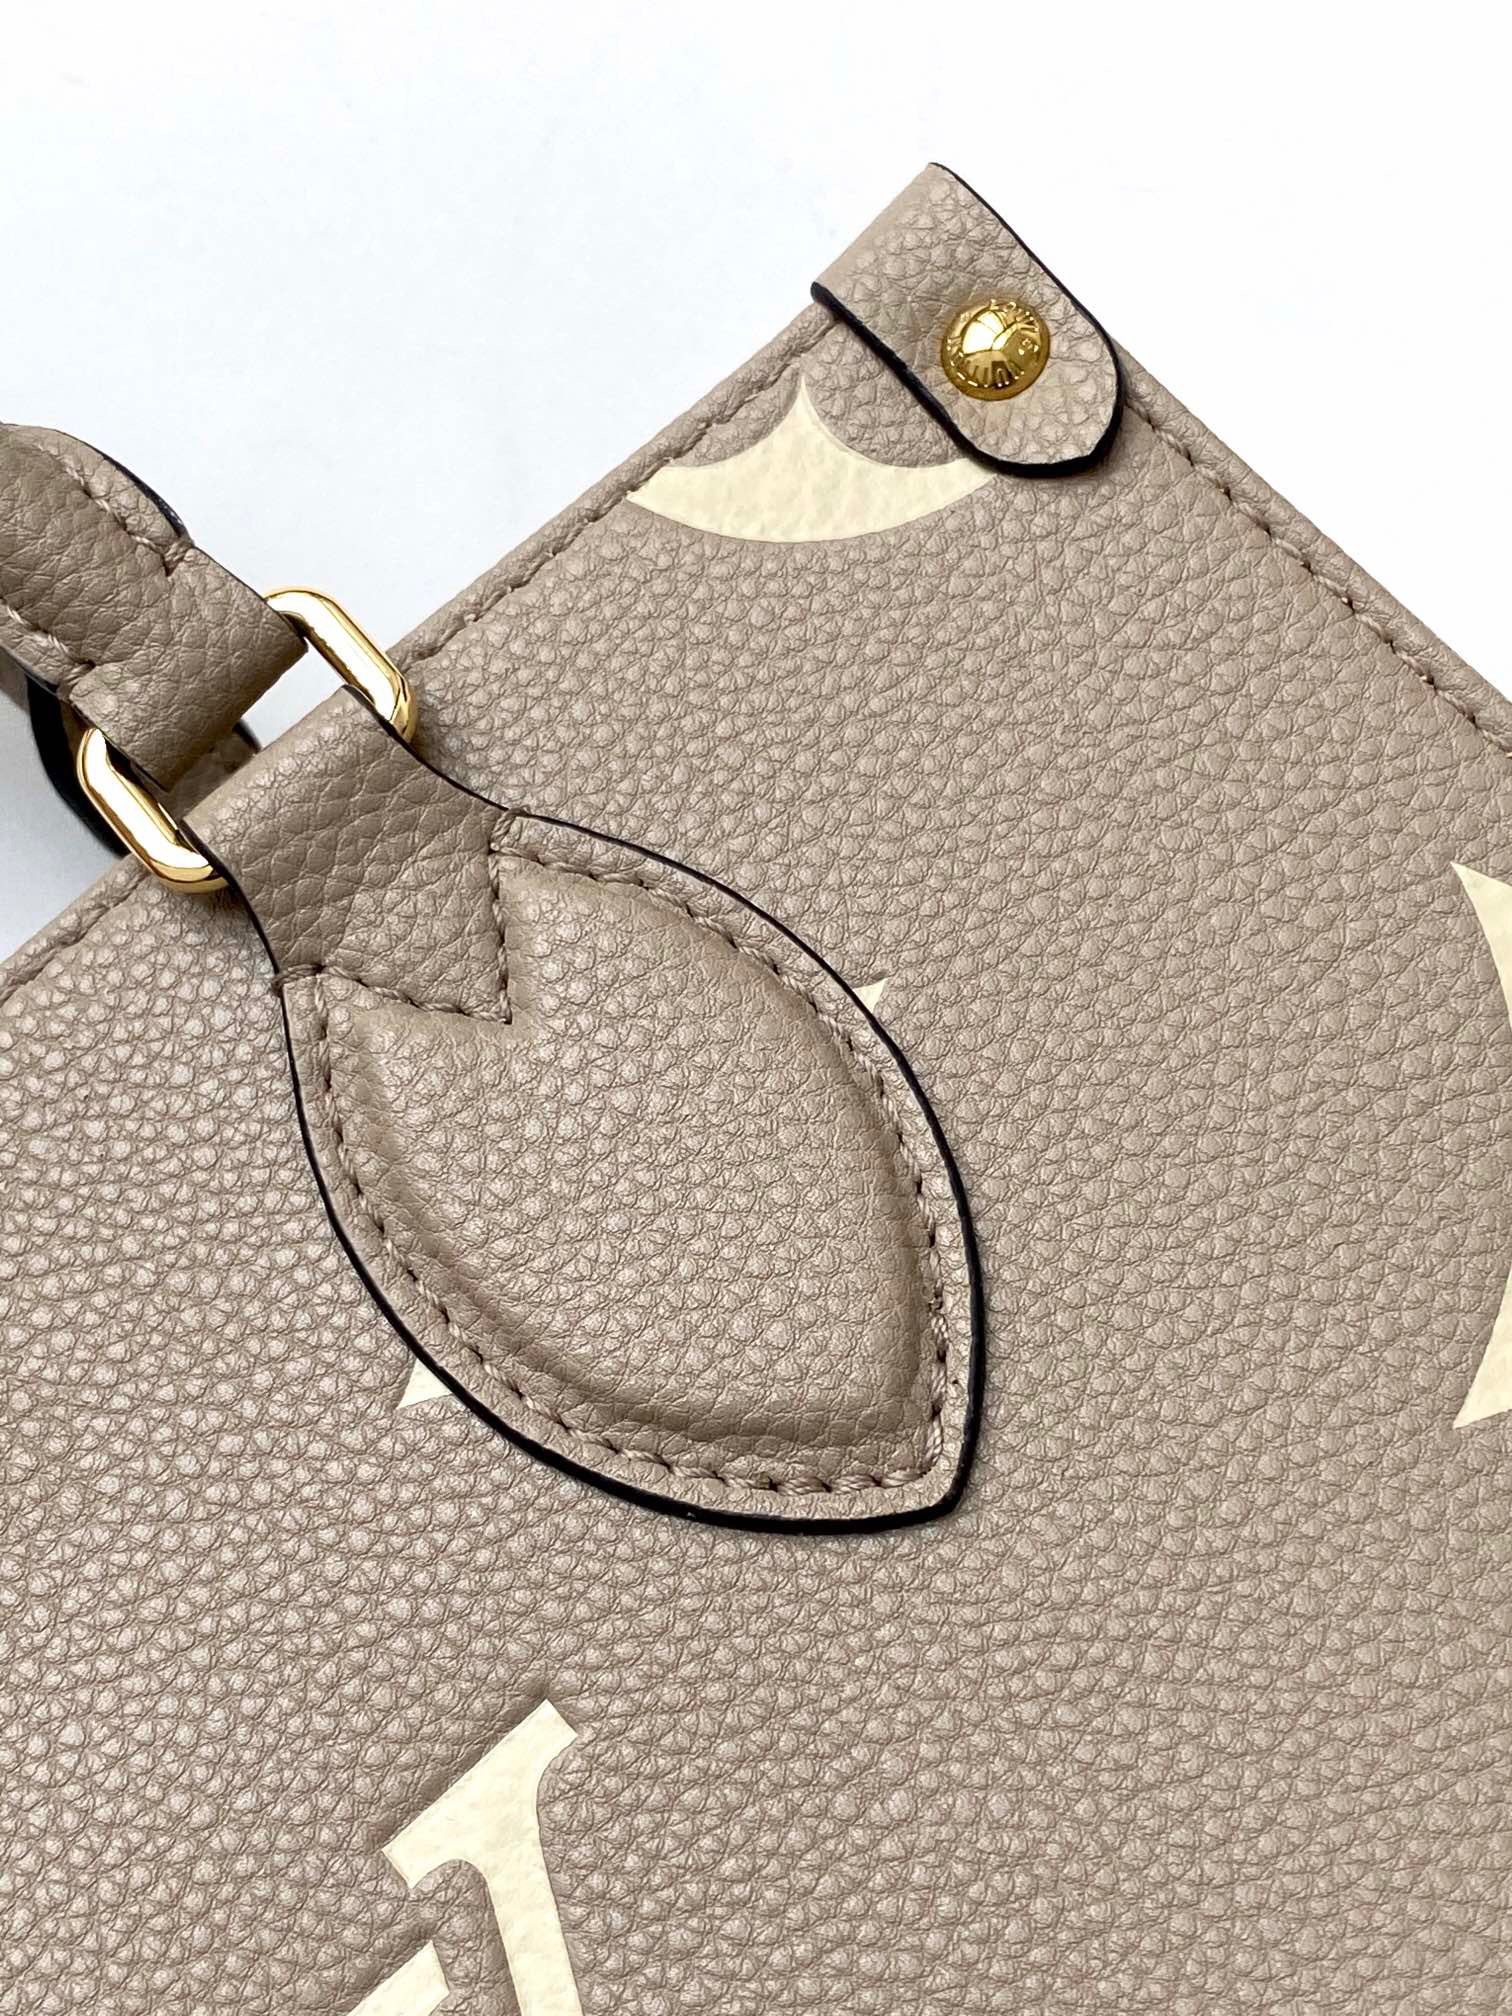 Louis Vuitton Plane Shaped Handbag For $39,000 - LoyaltyLobby